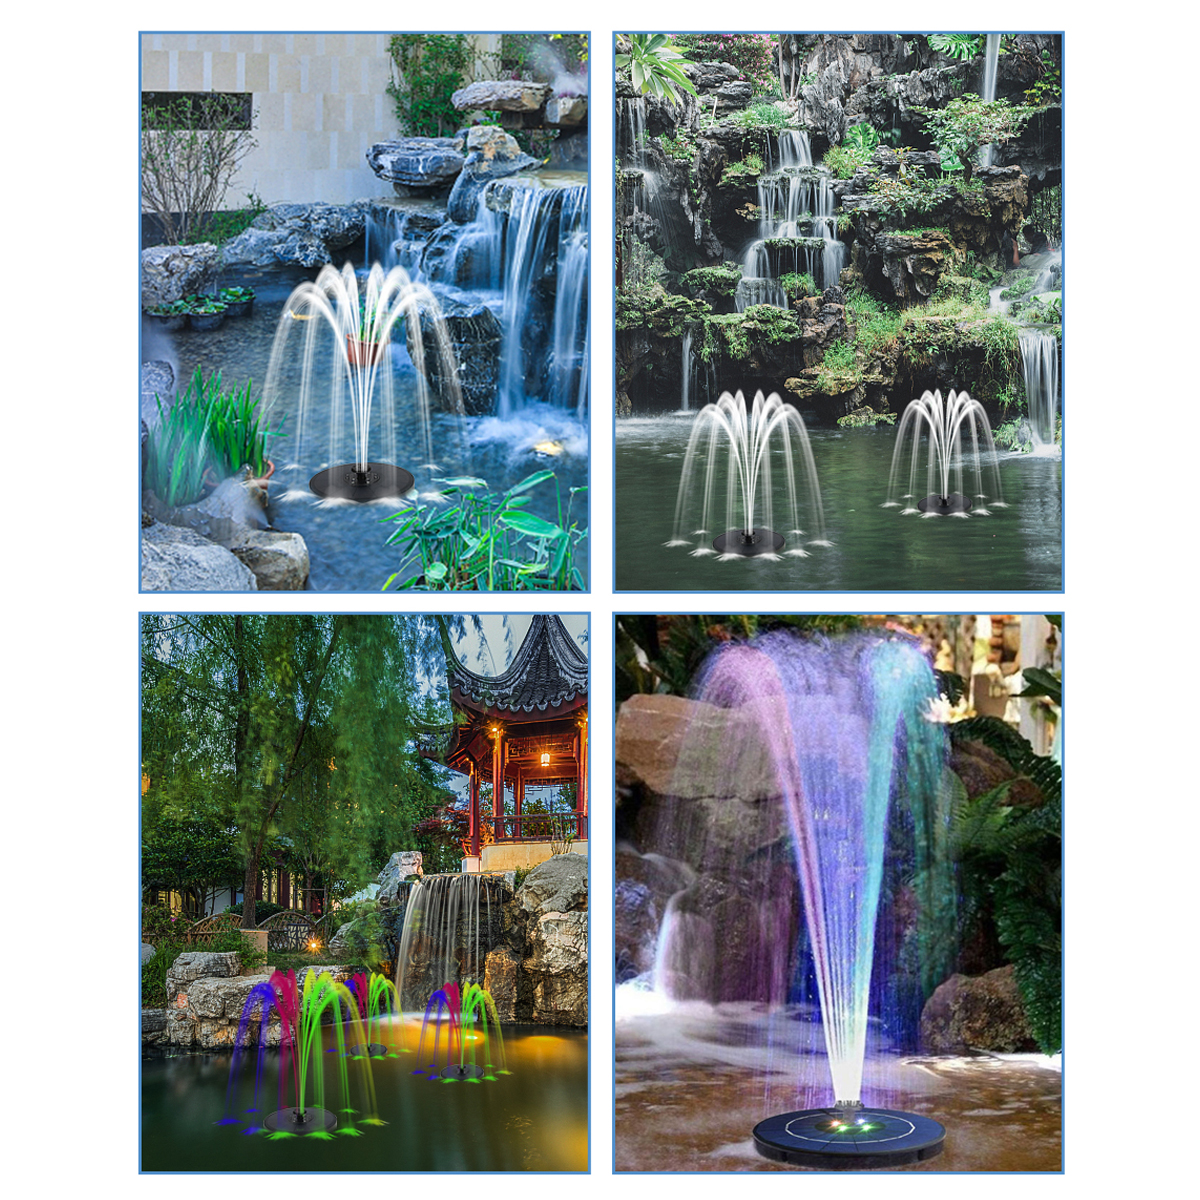 Solar-Powered-Floating-Bird-Bath-Fountain-Outdoor-Pond-Garden-Patio-Water-Pump-W-8-LED-Light-1844028-9